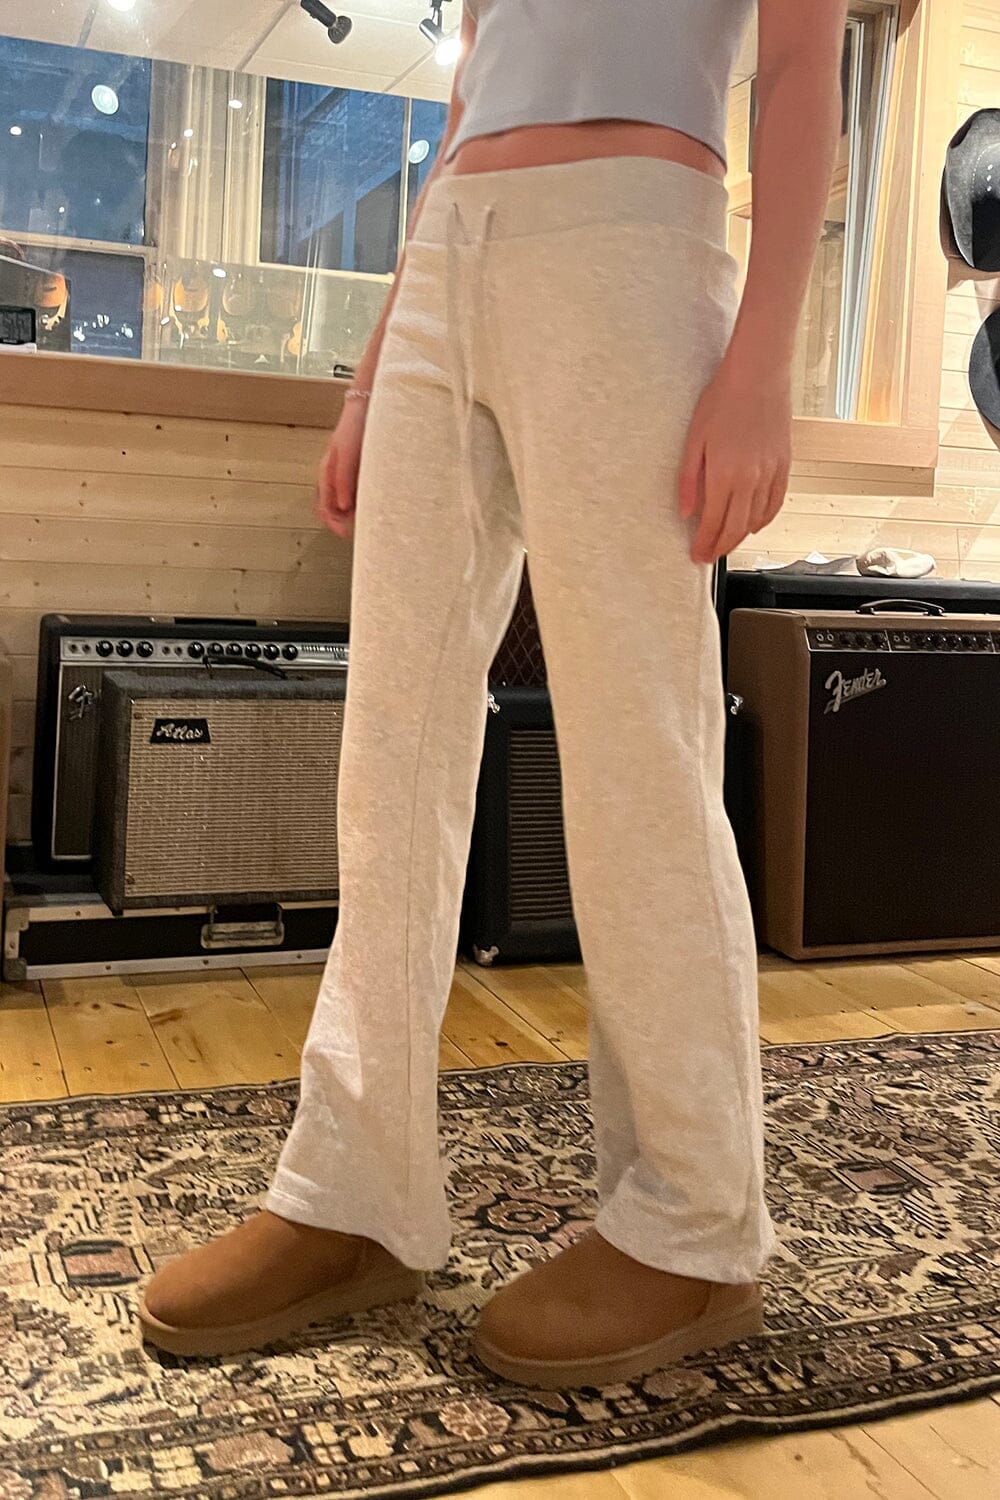 Brandy Melville yoga pants  Pants, Yoga pants, Clothes design